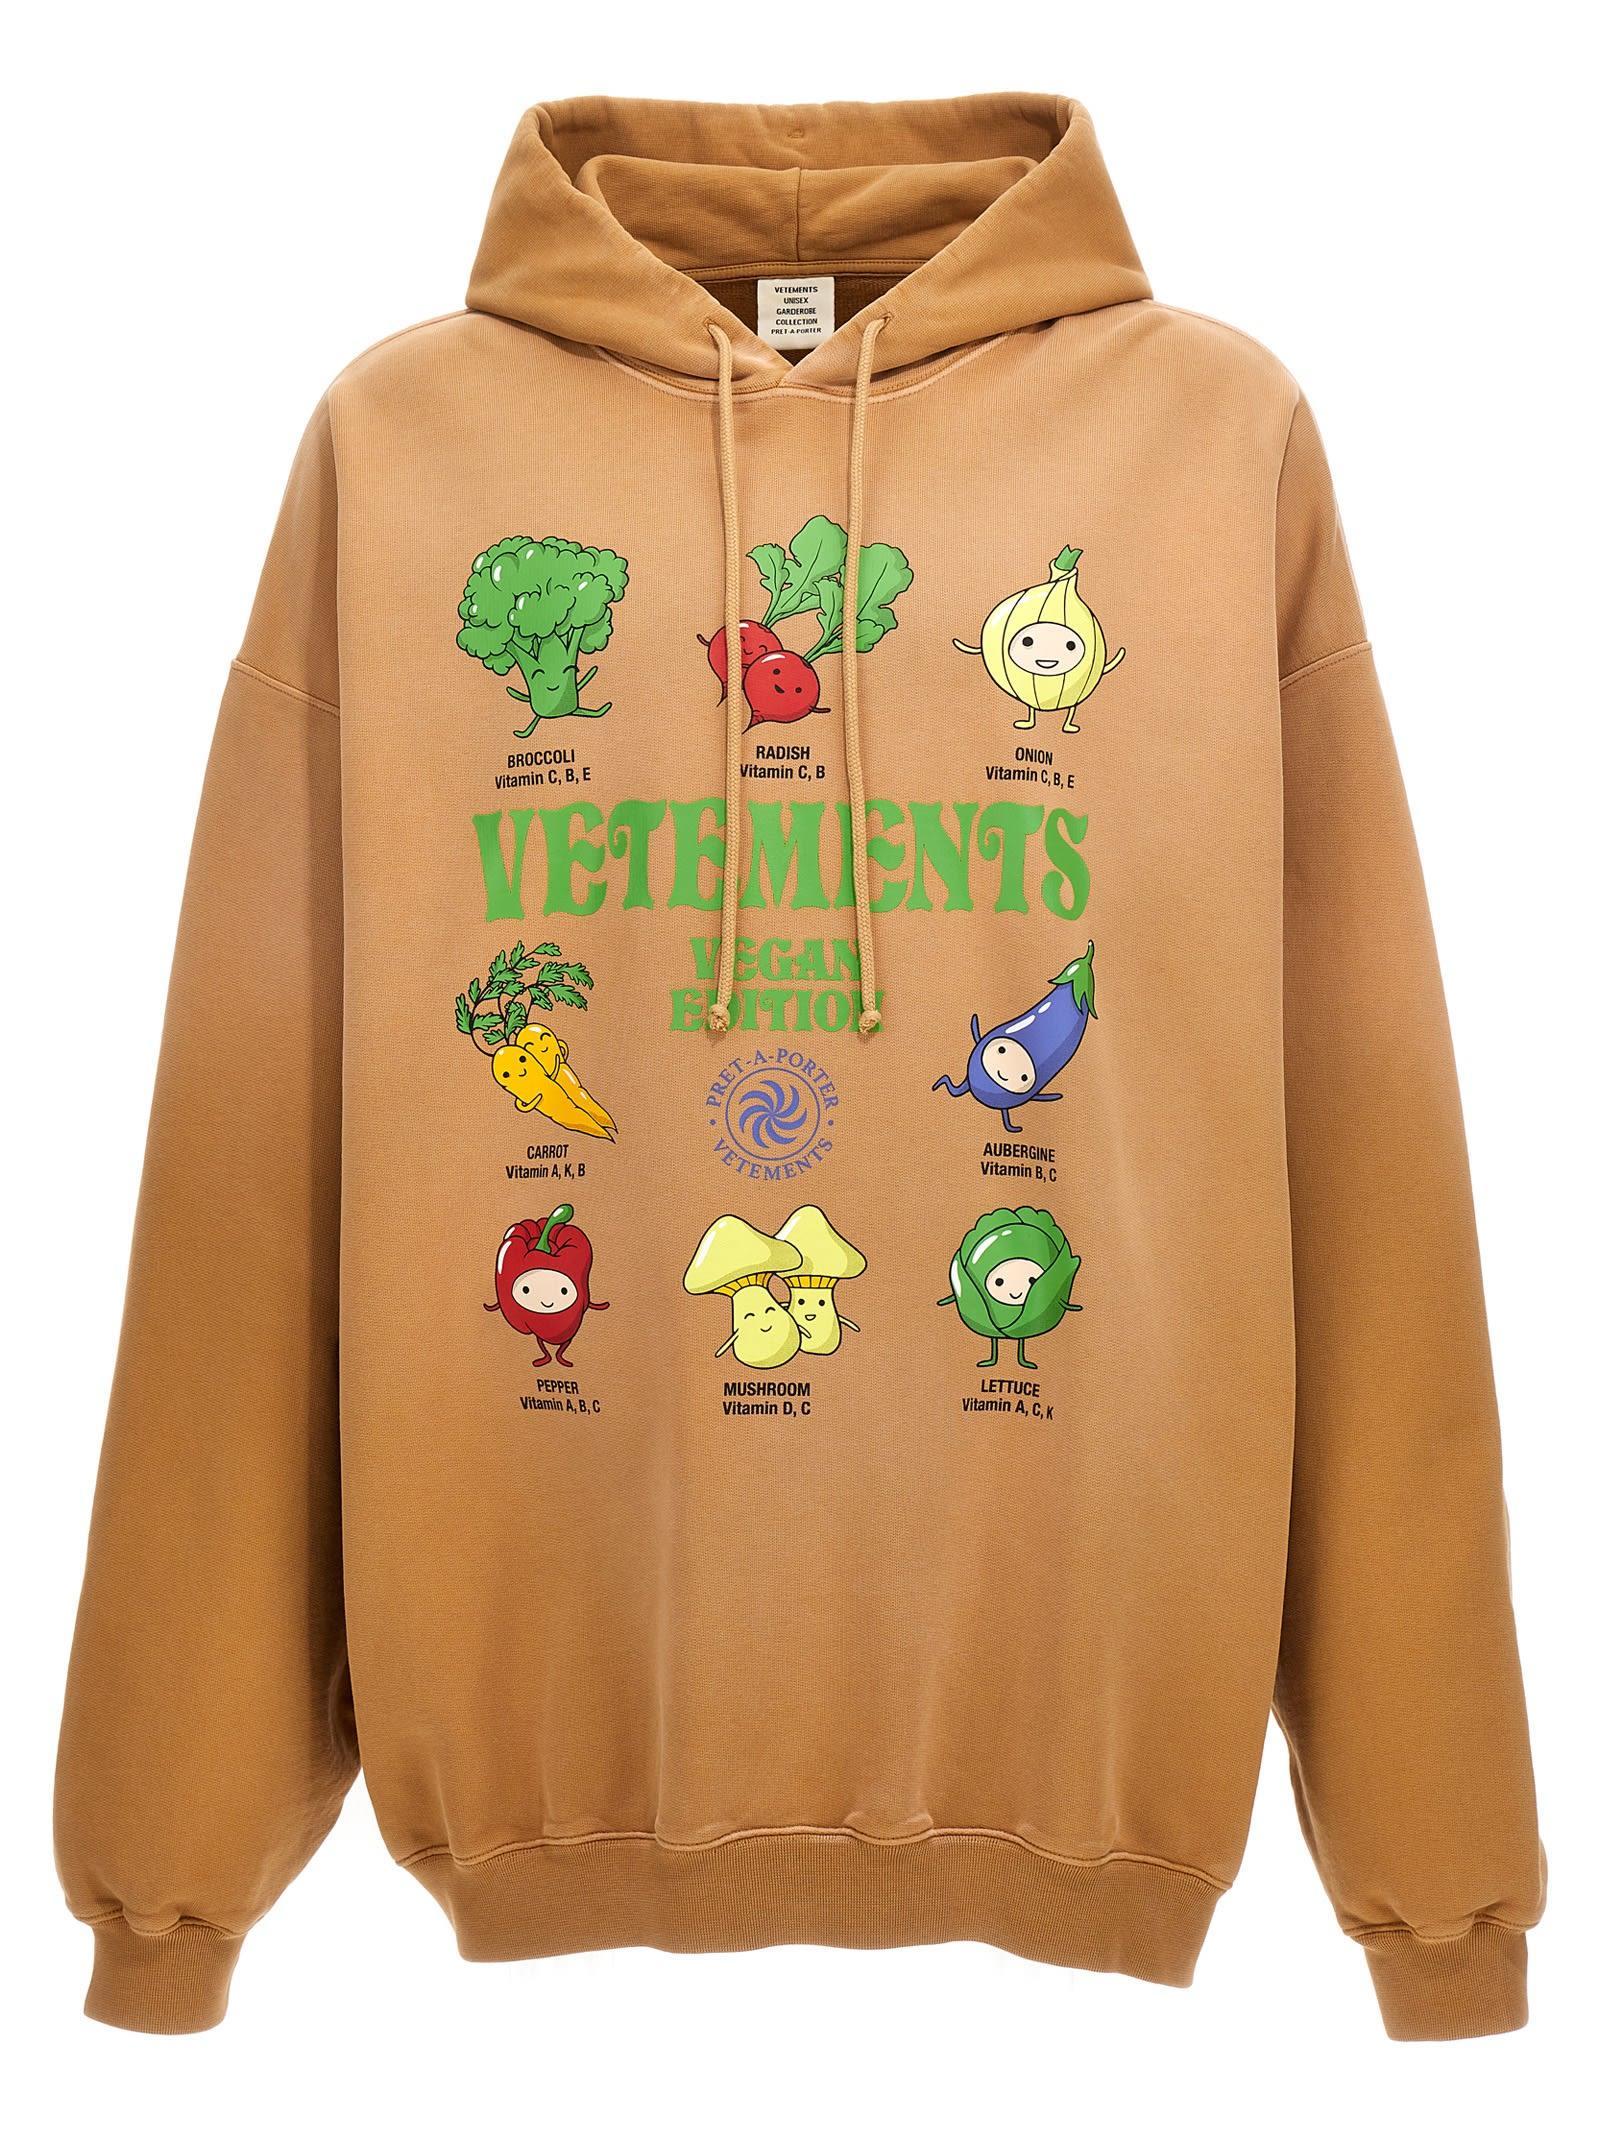 Vetements Vegan Edition Sweatshirt in Natural | Lyst